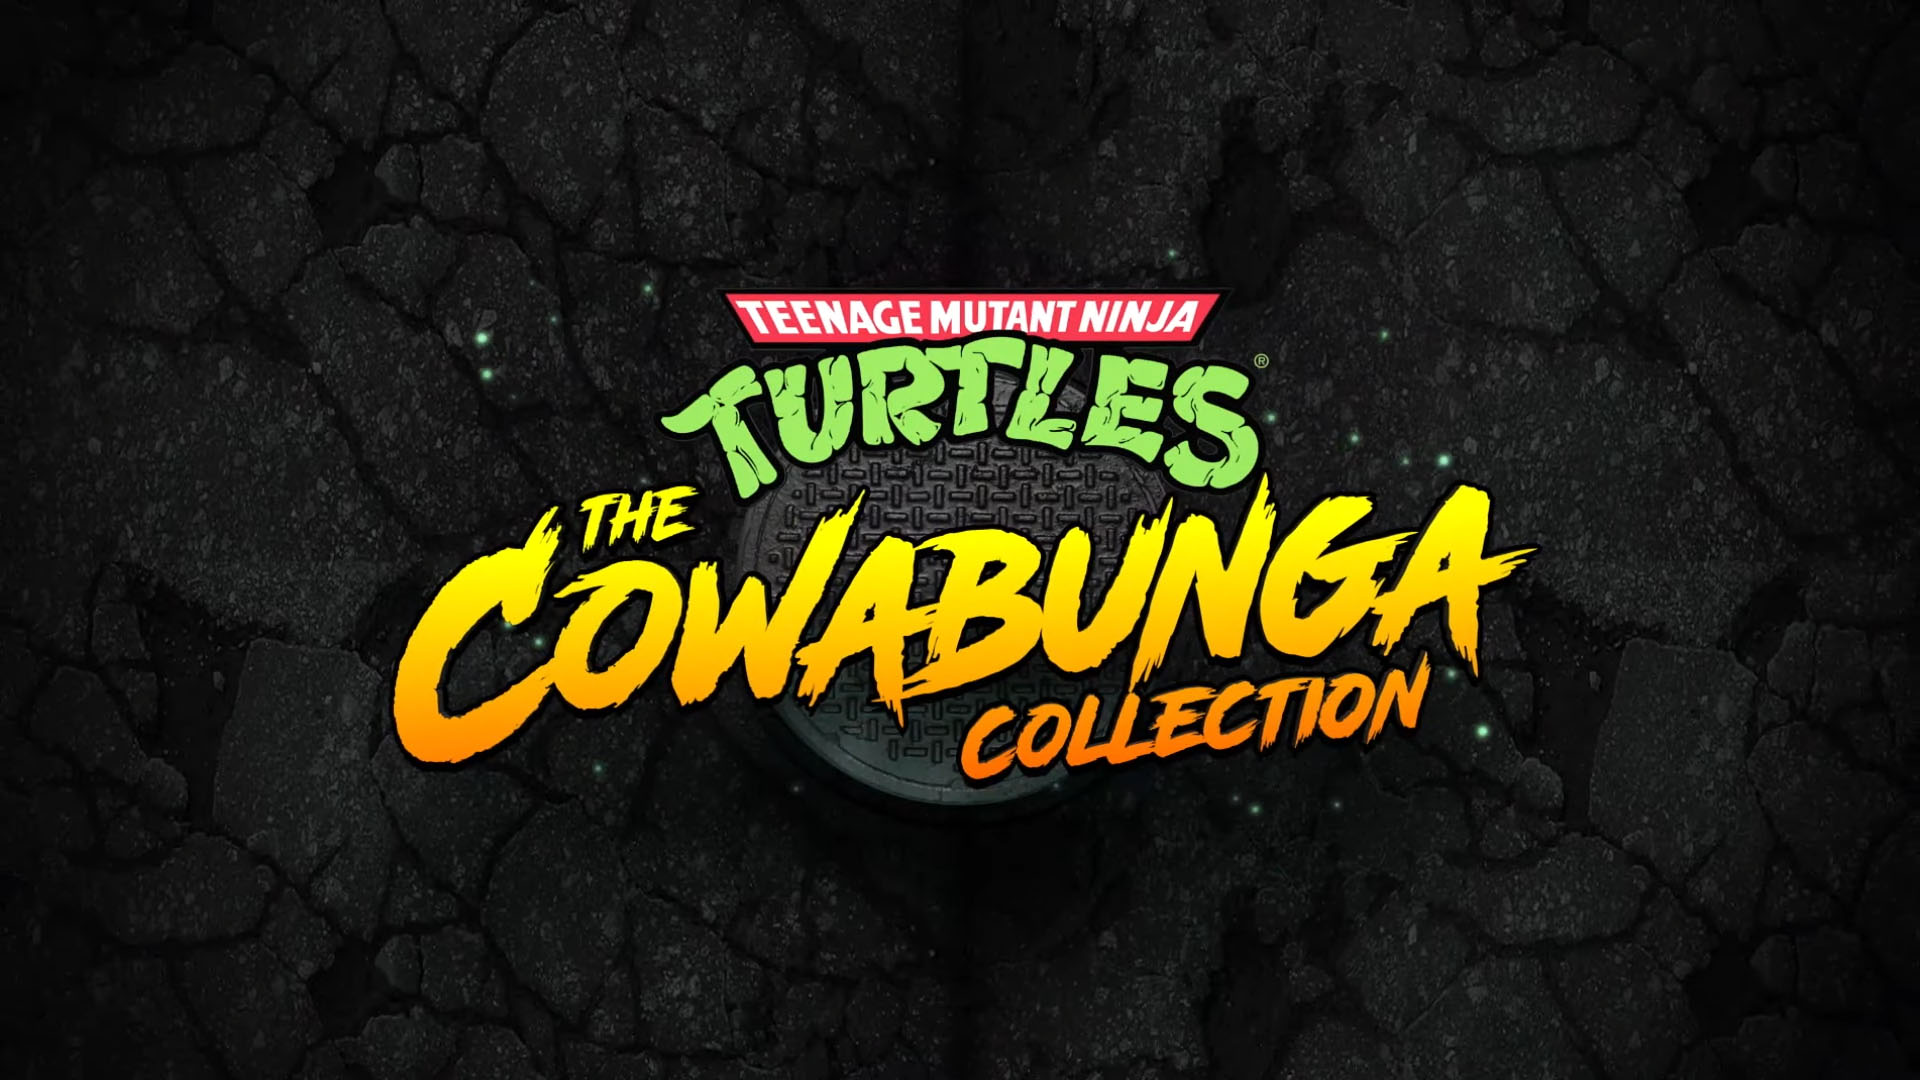 Коллекция из 13 игр Teenage Mutant Ninja Turtles выходит на Xbox в августе